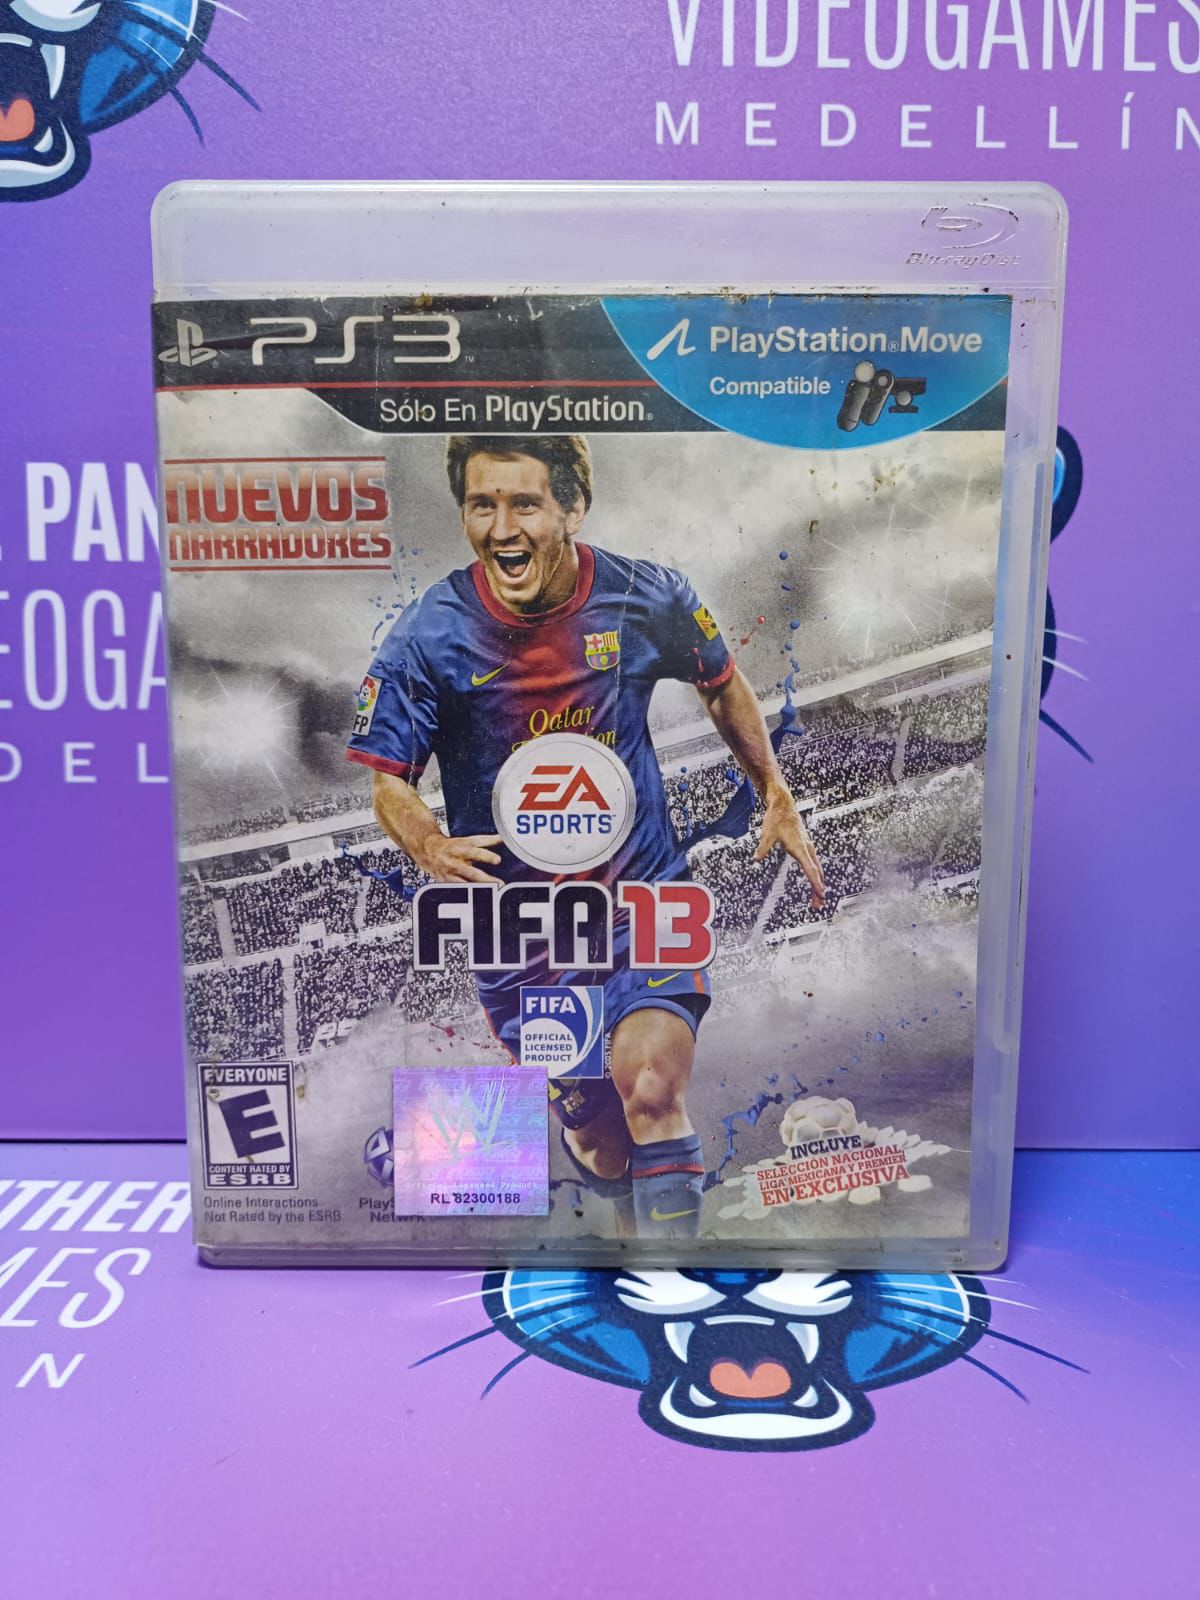 Fifa 13 - Playstation 3